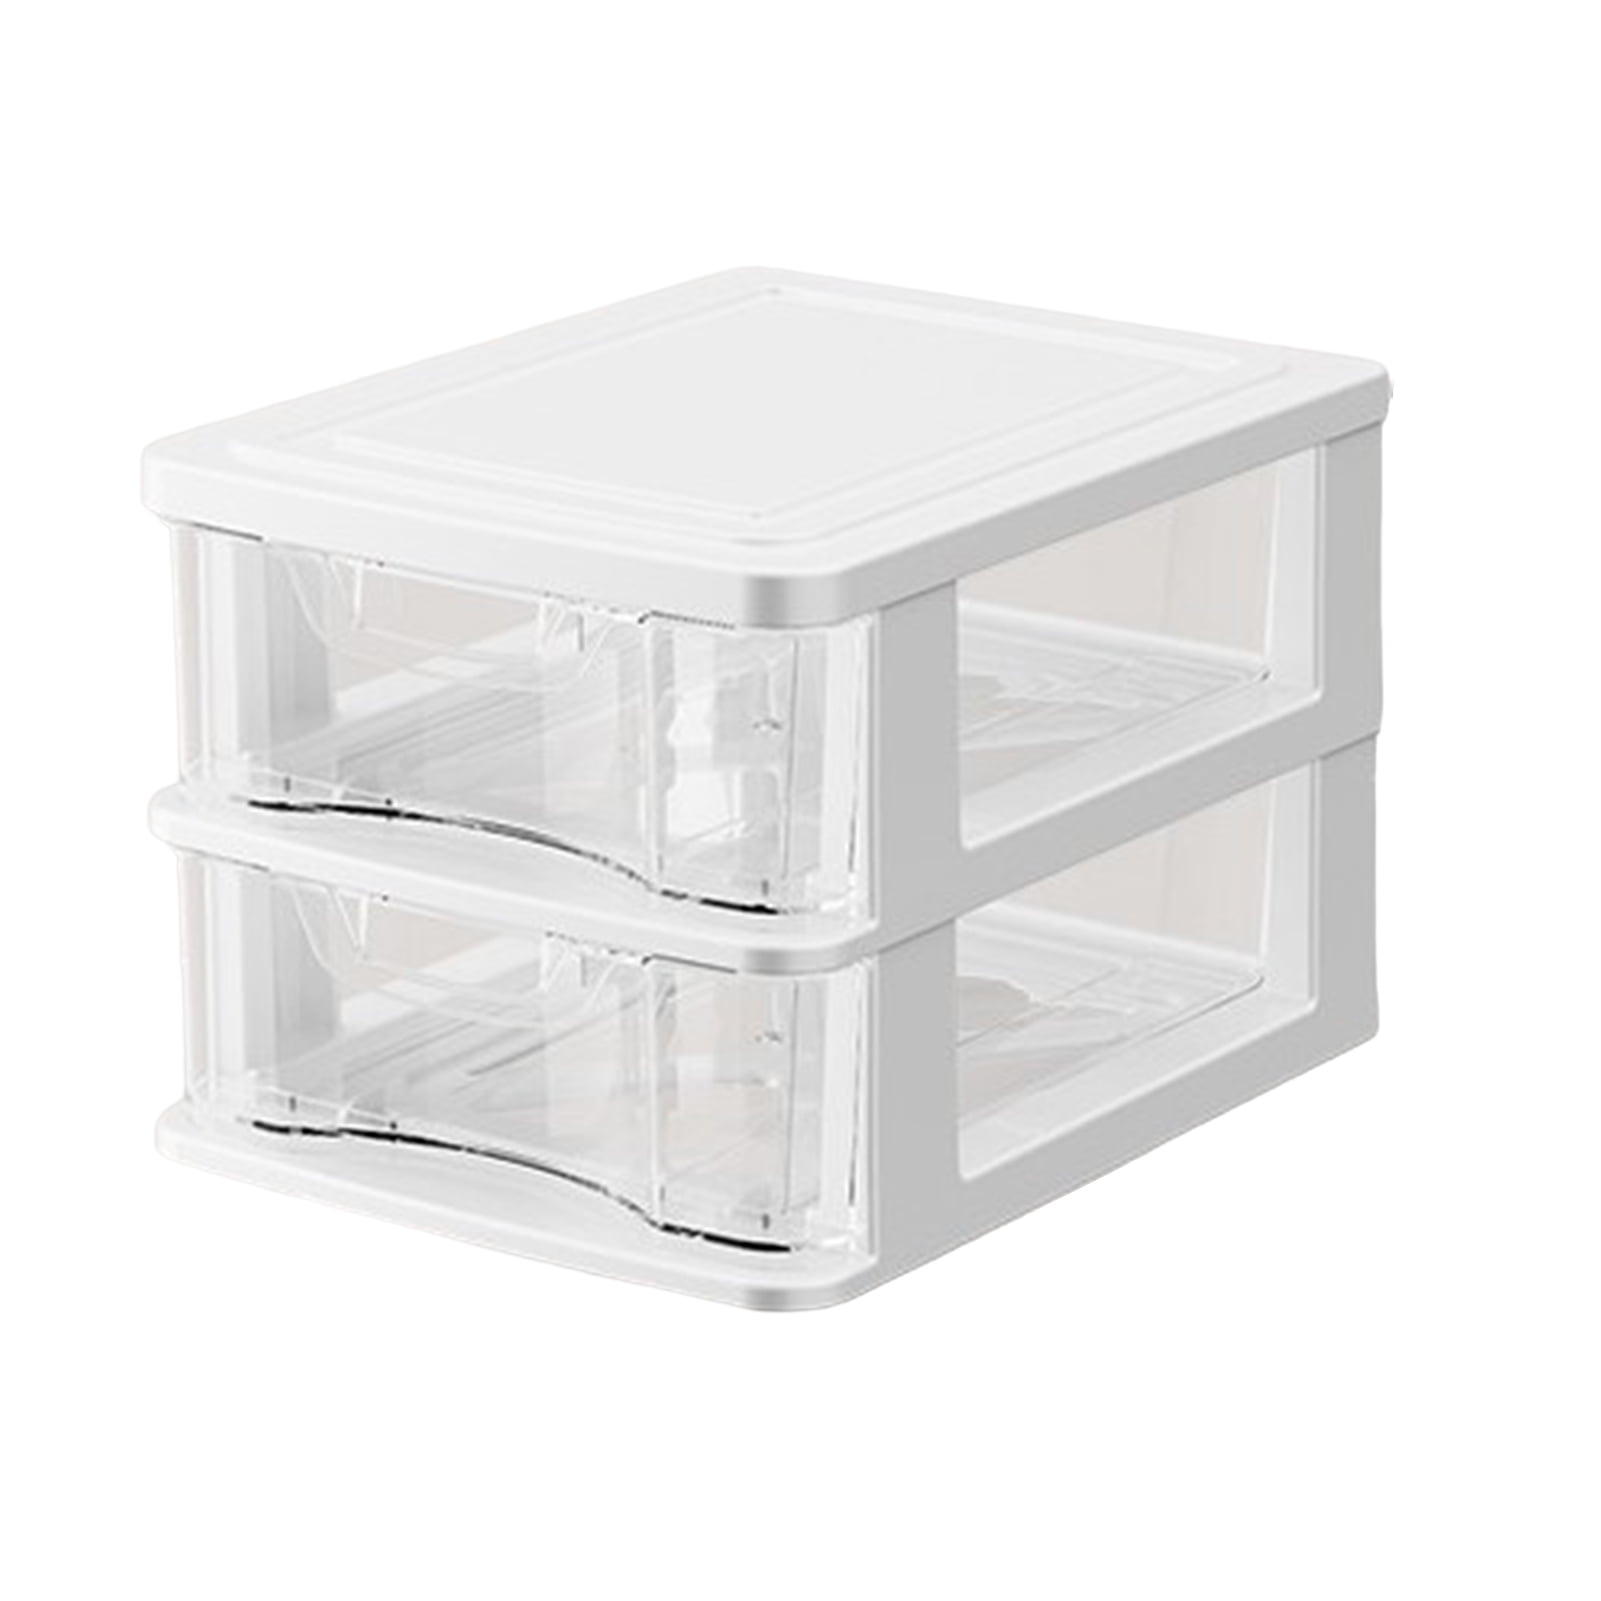 Transparent Desktop Storage Box - Large Capacity, Multi-layer